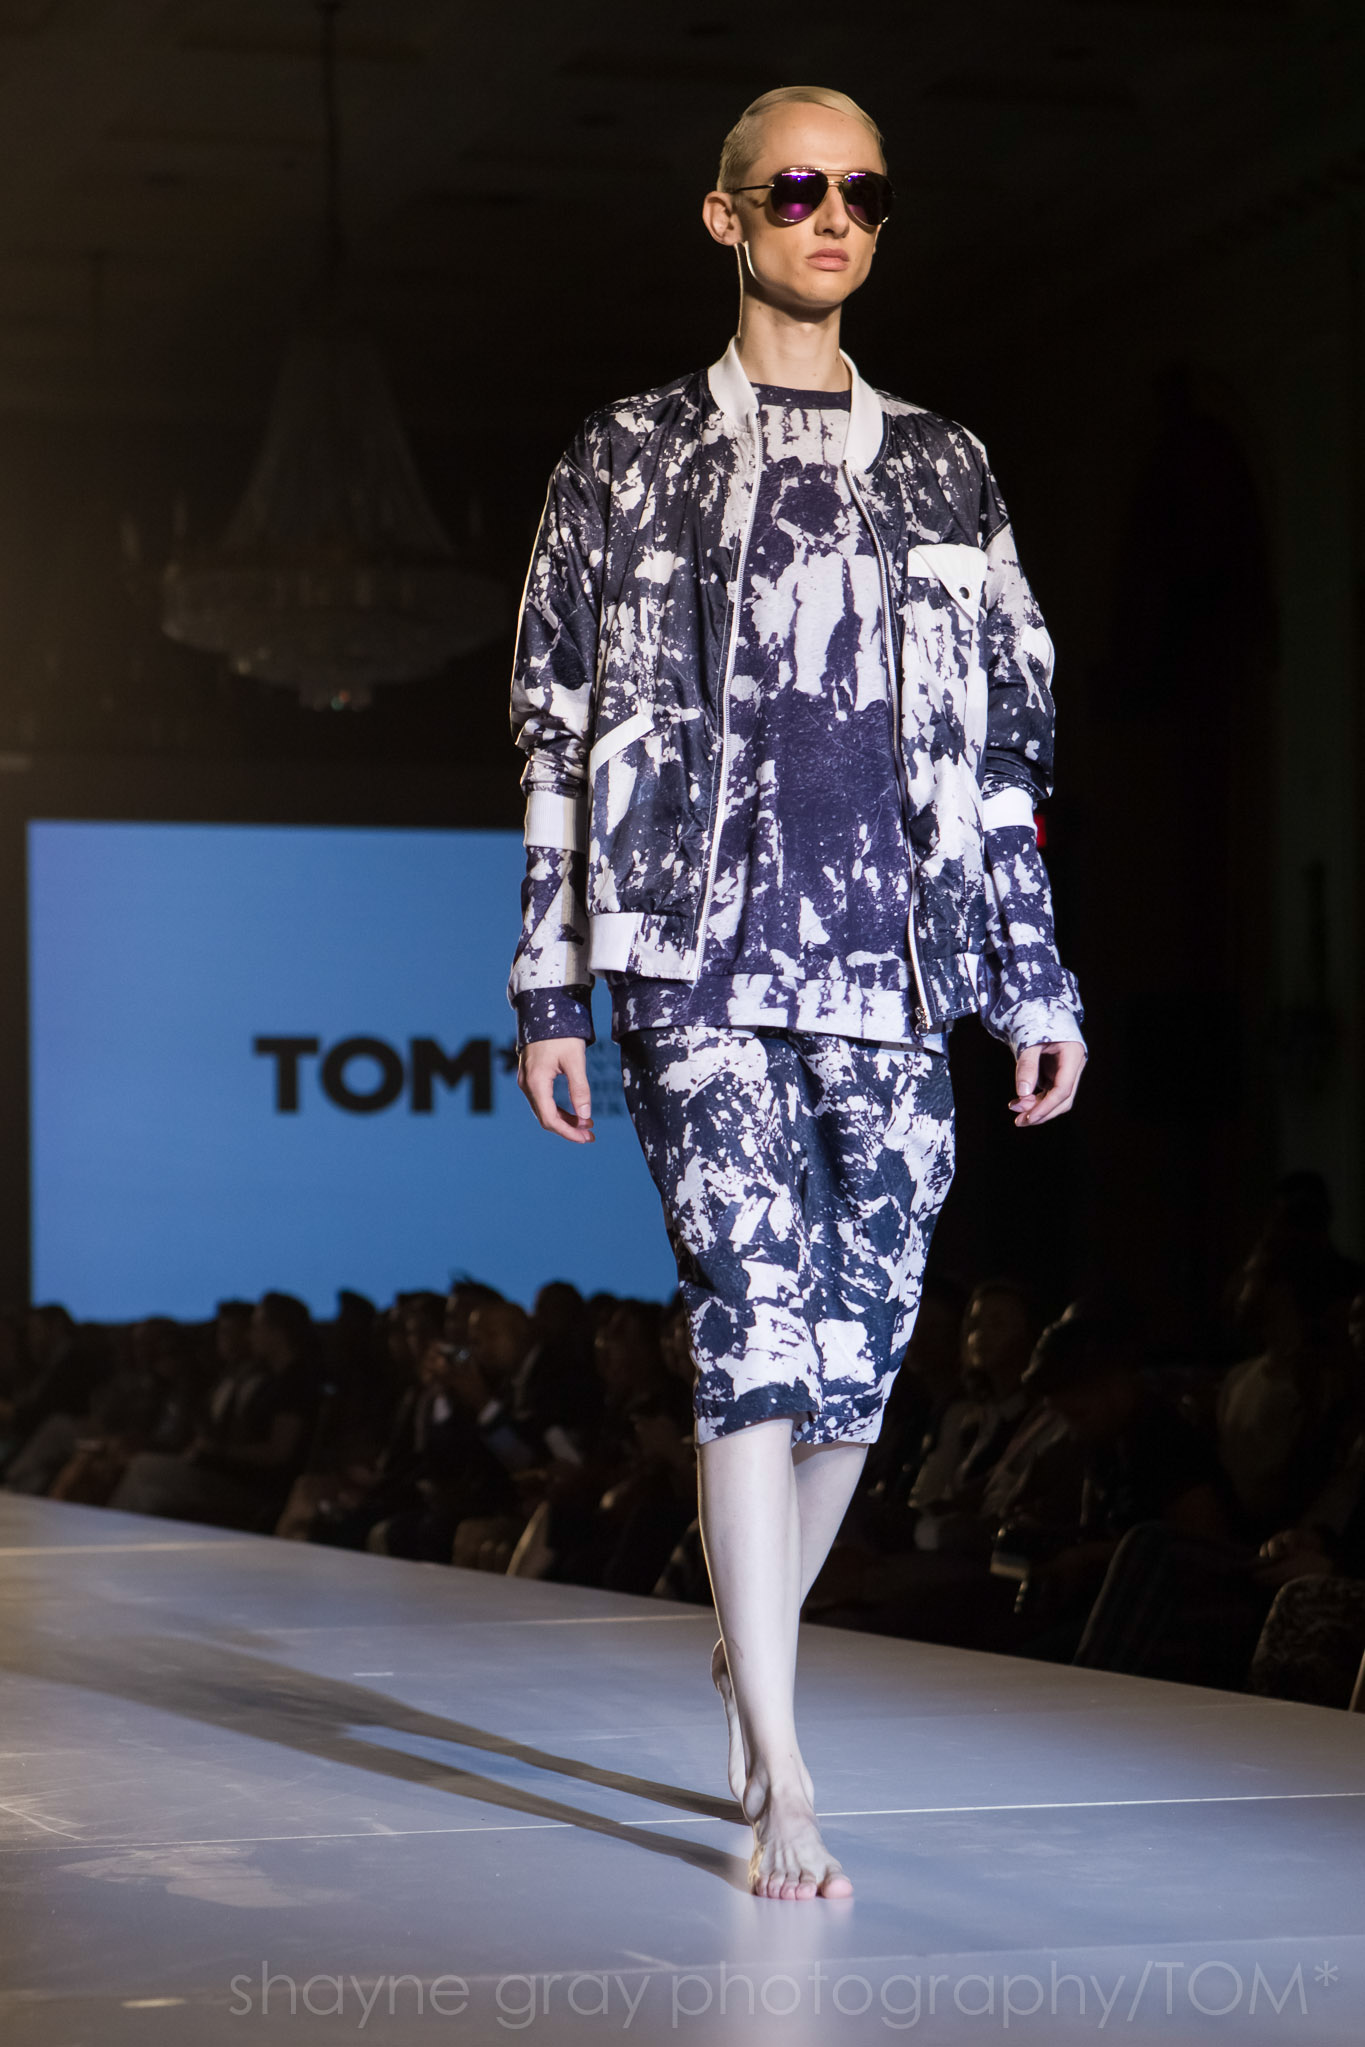 Shayne-Gray-Toronto-men's-fashion_week-TOM-tothem-6917.jpg